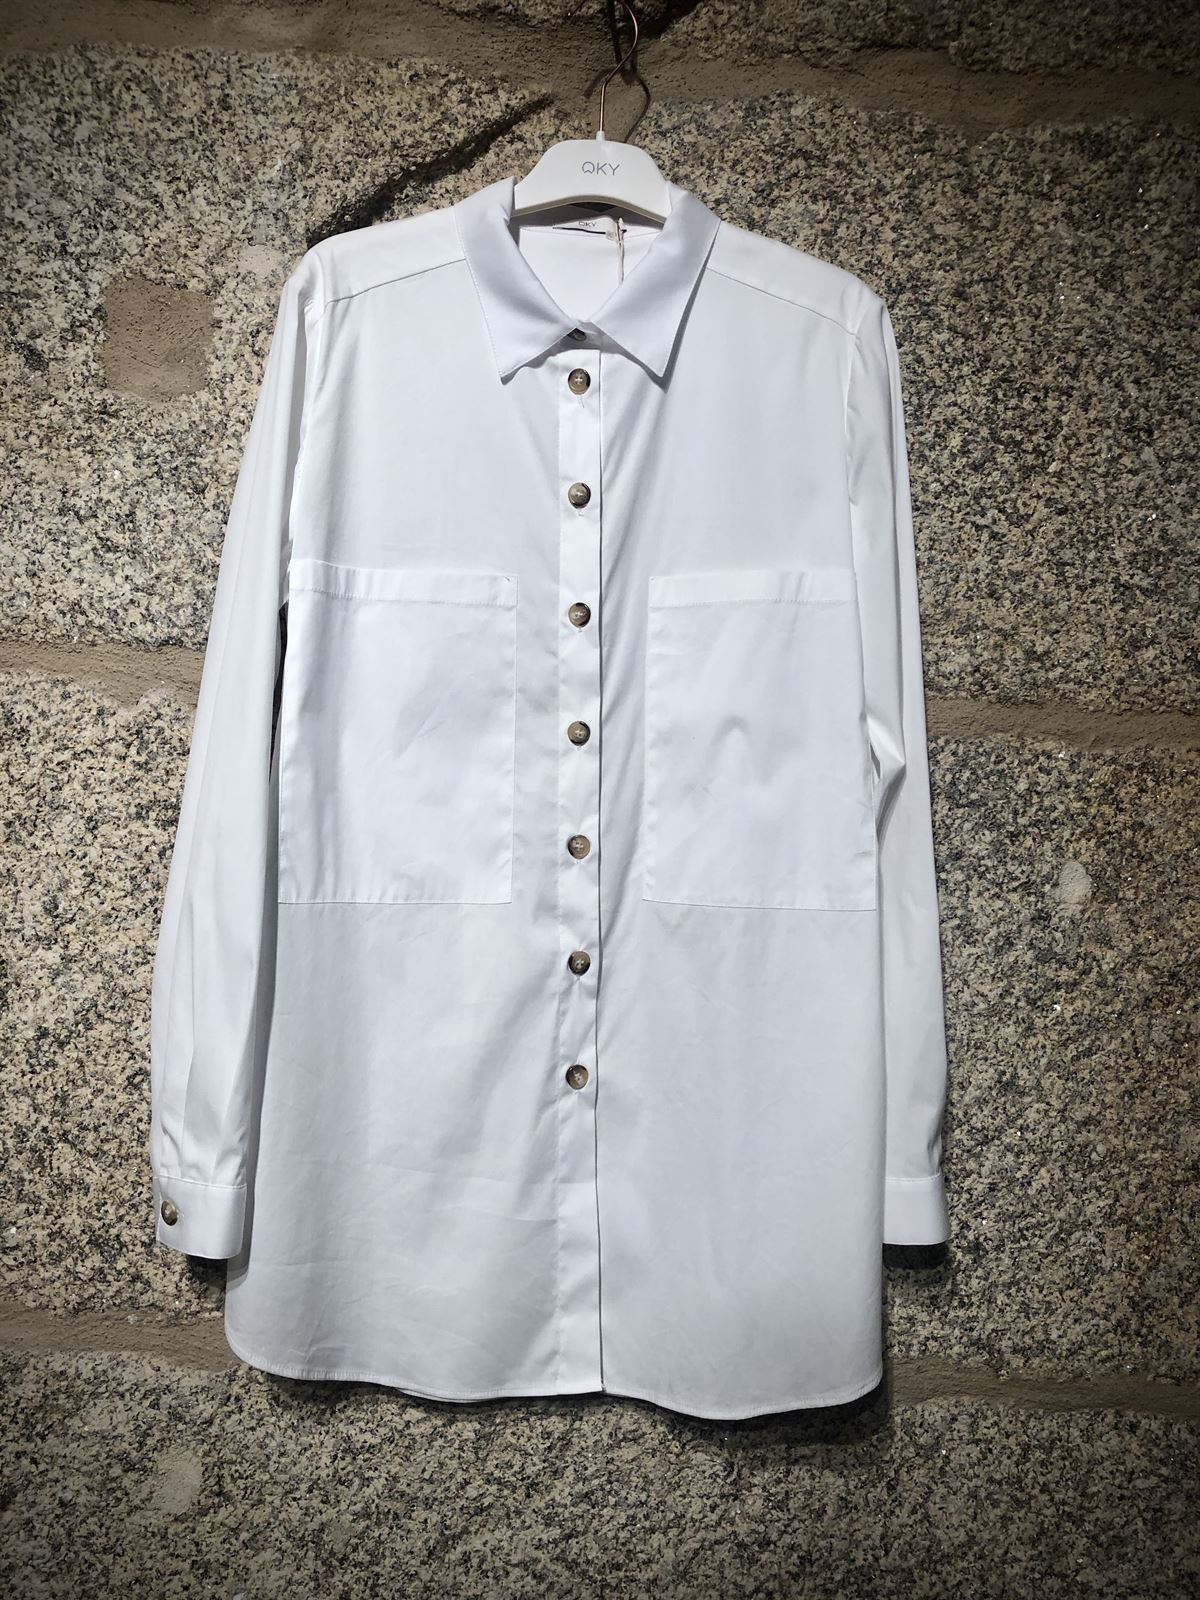 Camisa Oky botones blanca - Imagen 1